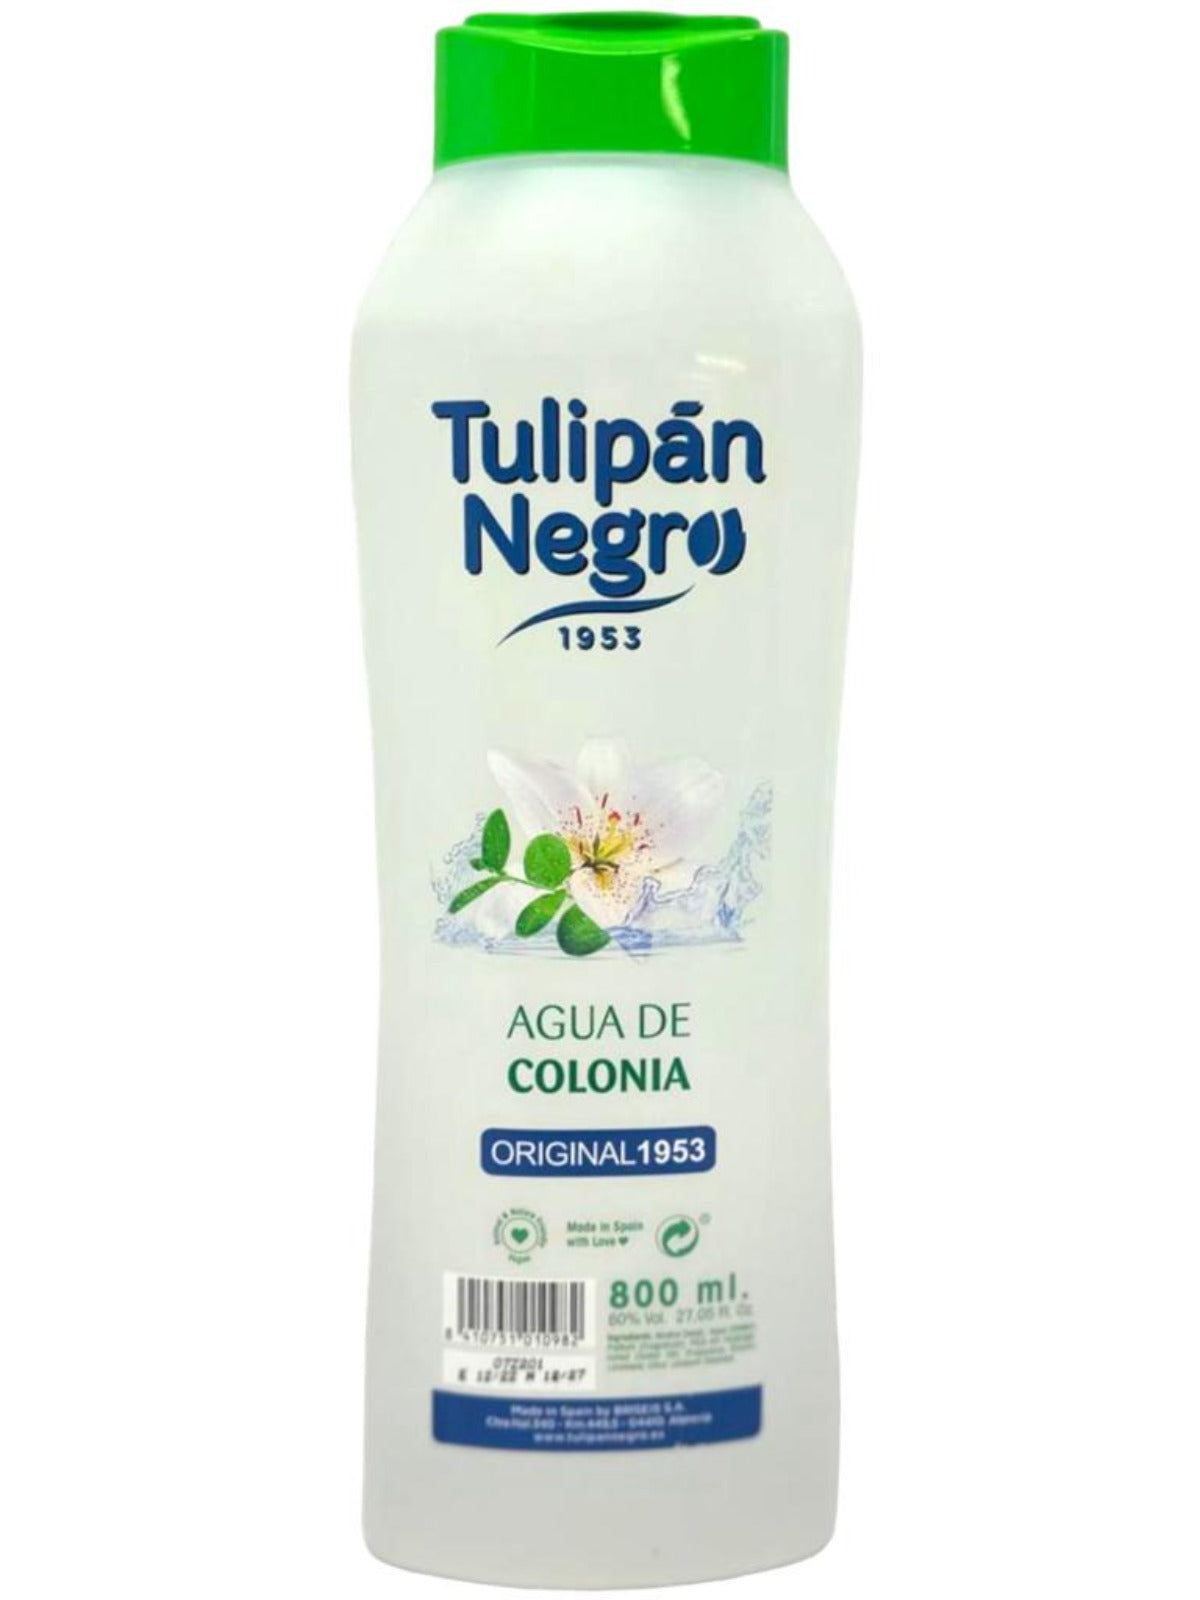 Tulipan Negro Agua de Colonia Original Spanish Bath And Shower Gel 800ml